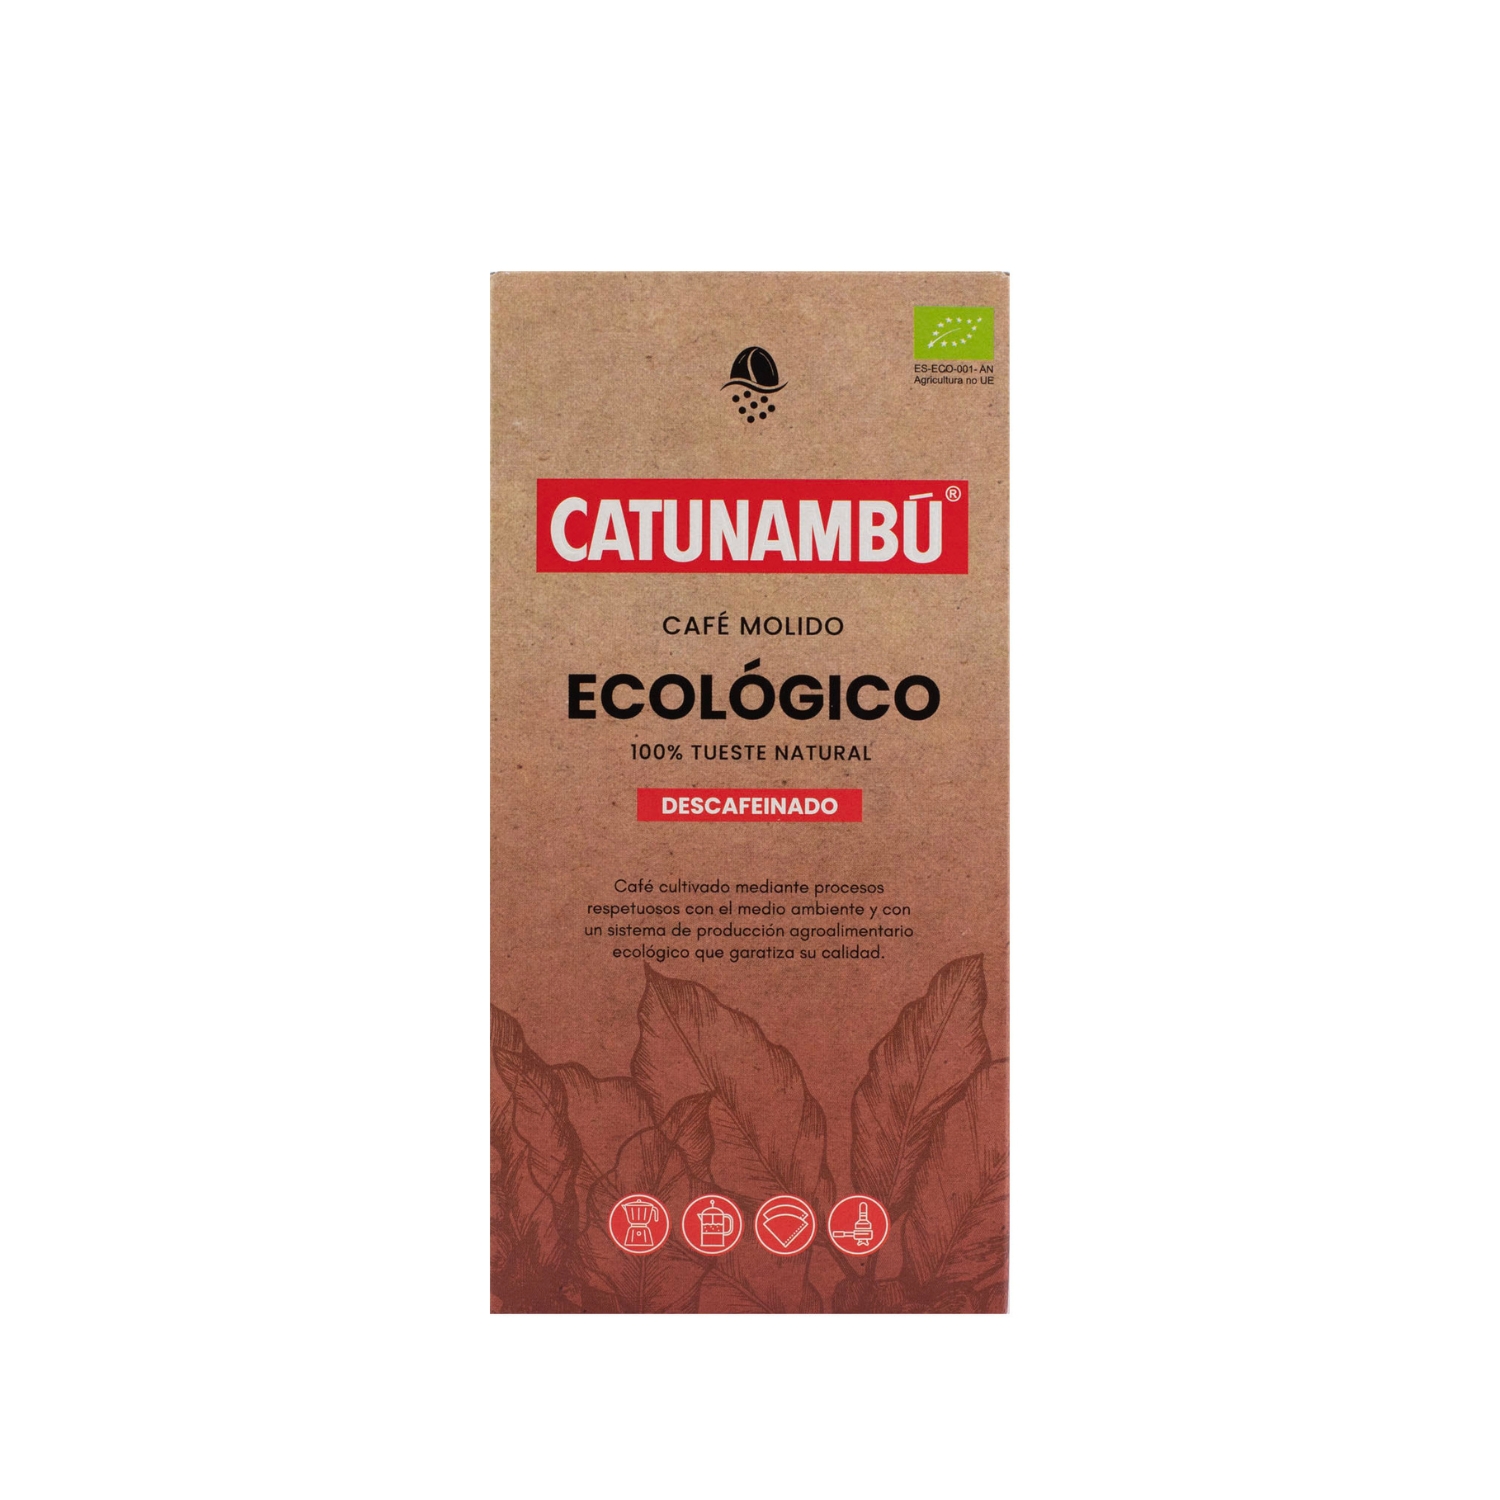 Paquete de café molido natural Ecológico Descafeinado Catunambú de 250gr.